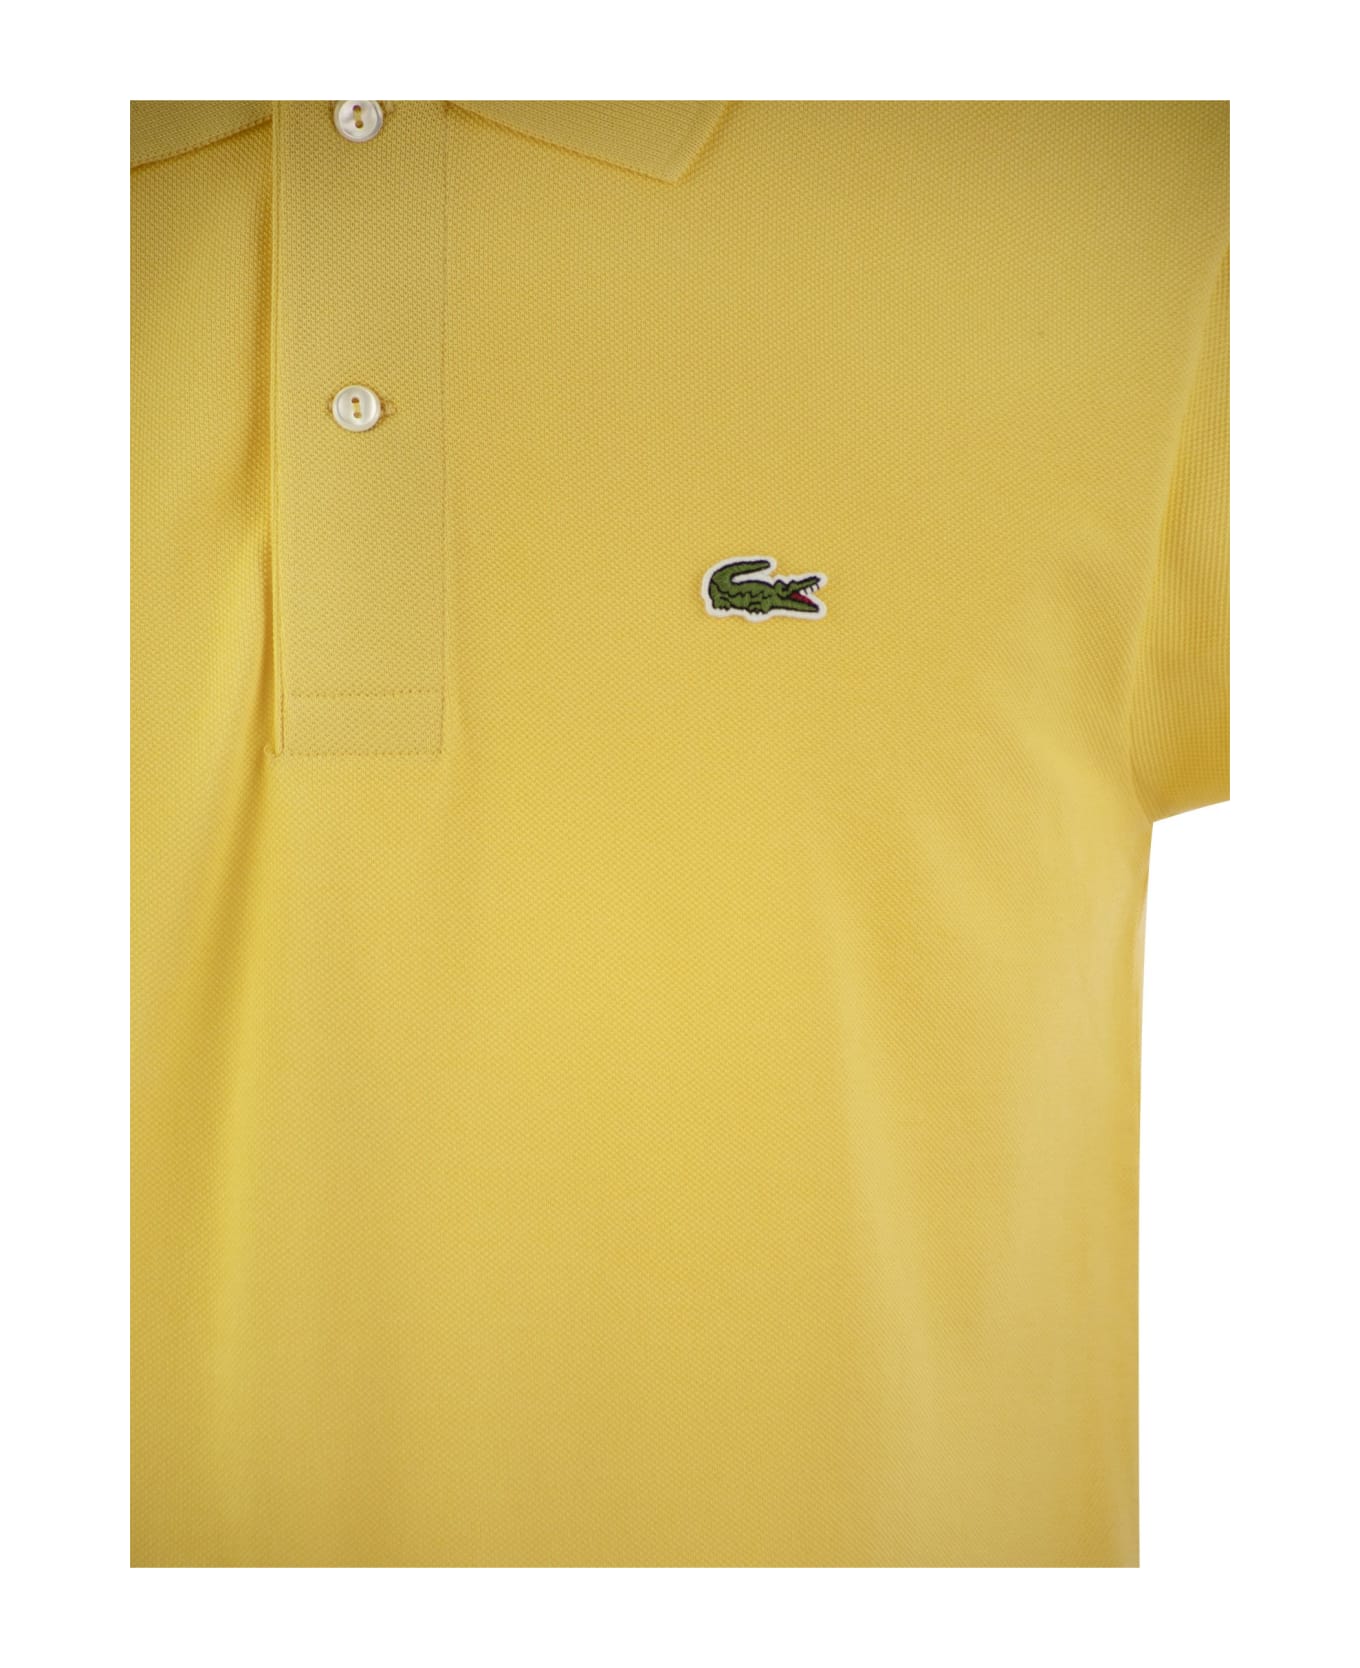 Lacoste Classic Fit Cotton Pique Polo Shirt - Giallo